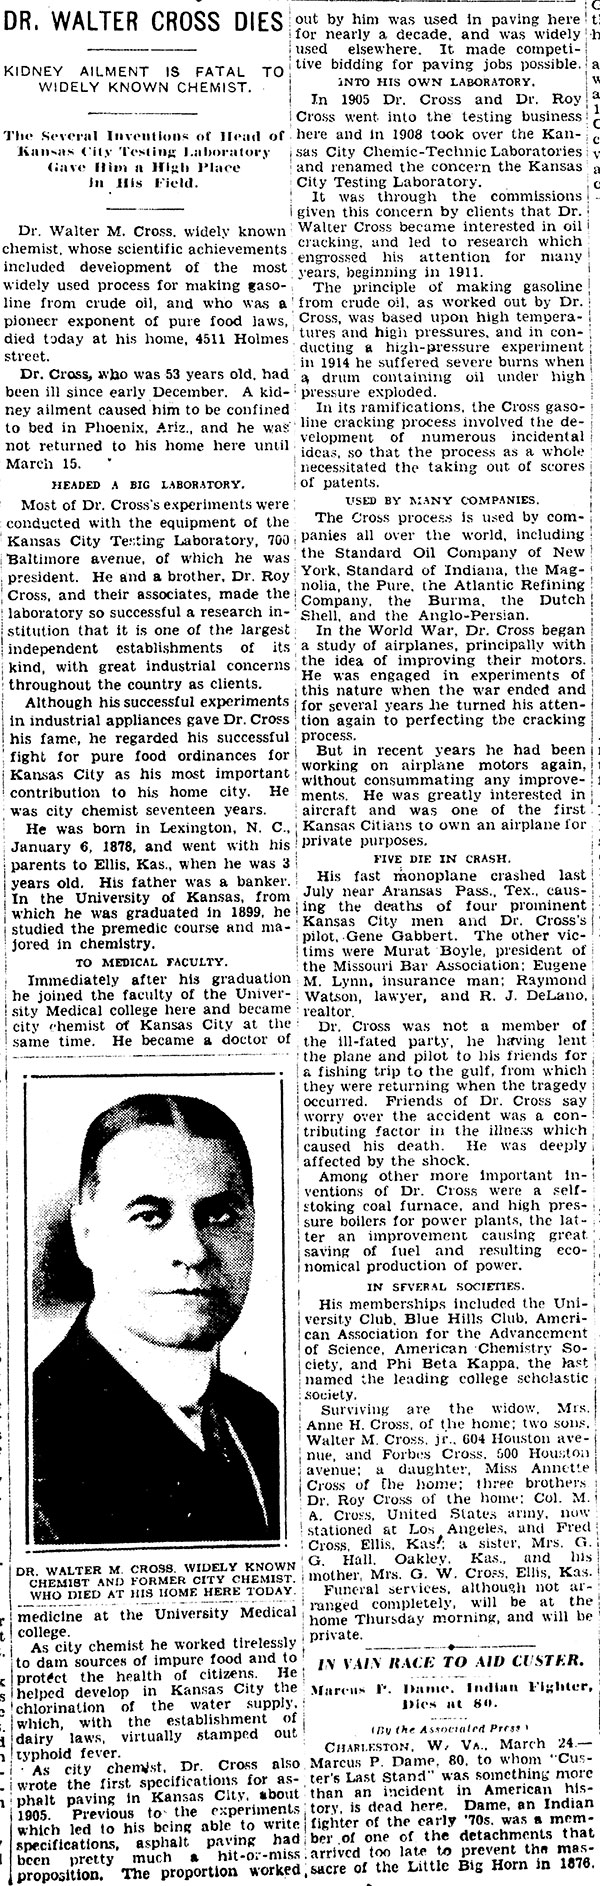 W.M. Cross Obituary, Kansas City Star, March 24, 1931 (Source: Woodling)